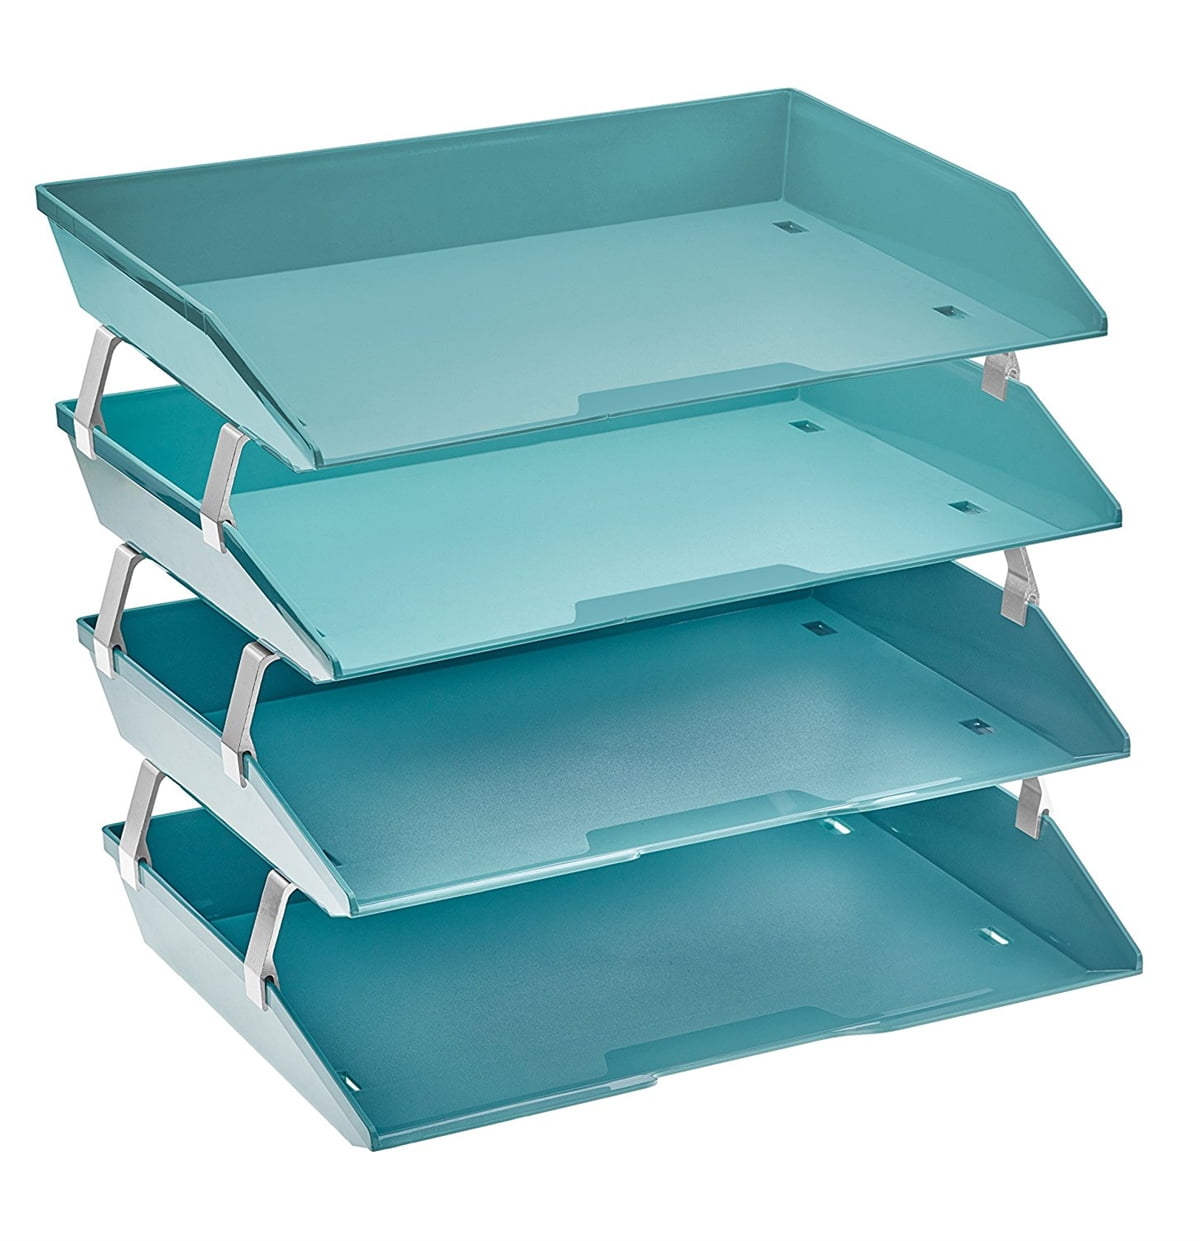 Acrimet Facility 2 Tier Letter Tray Side Load Plastic Desktop File Organizer Clear Green Color